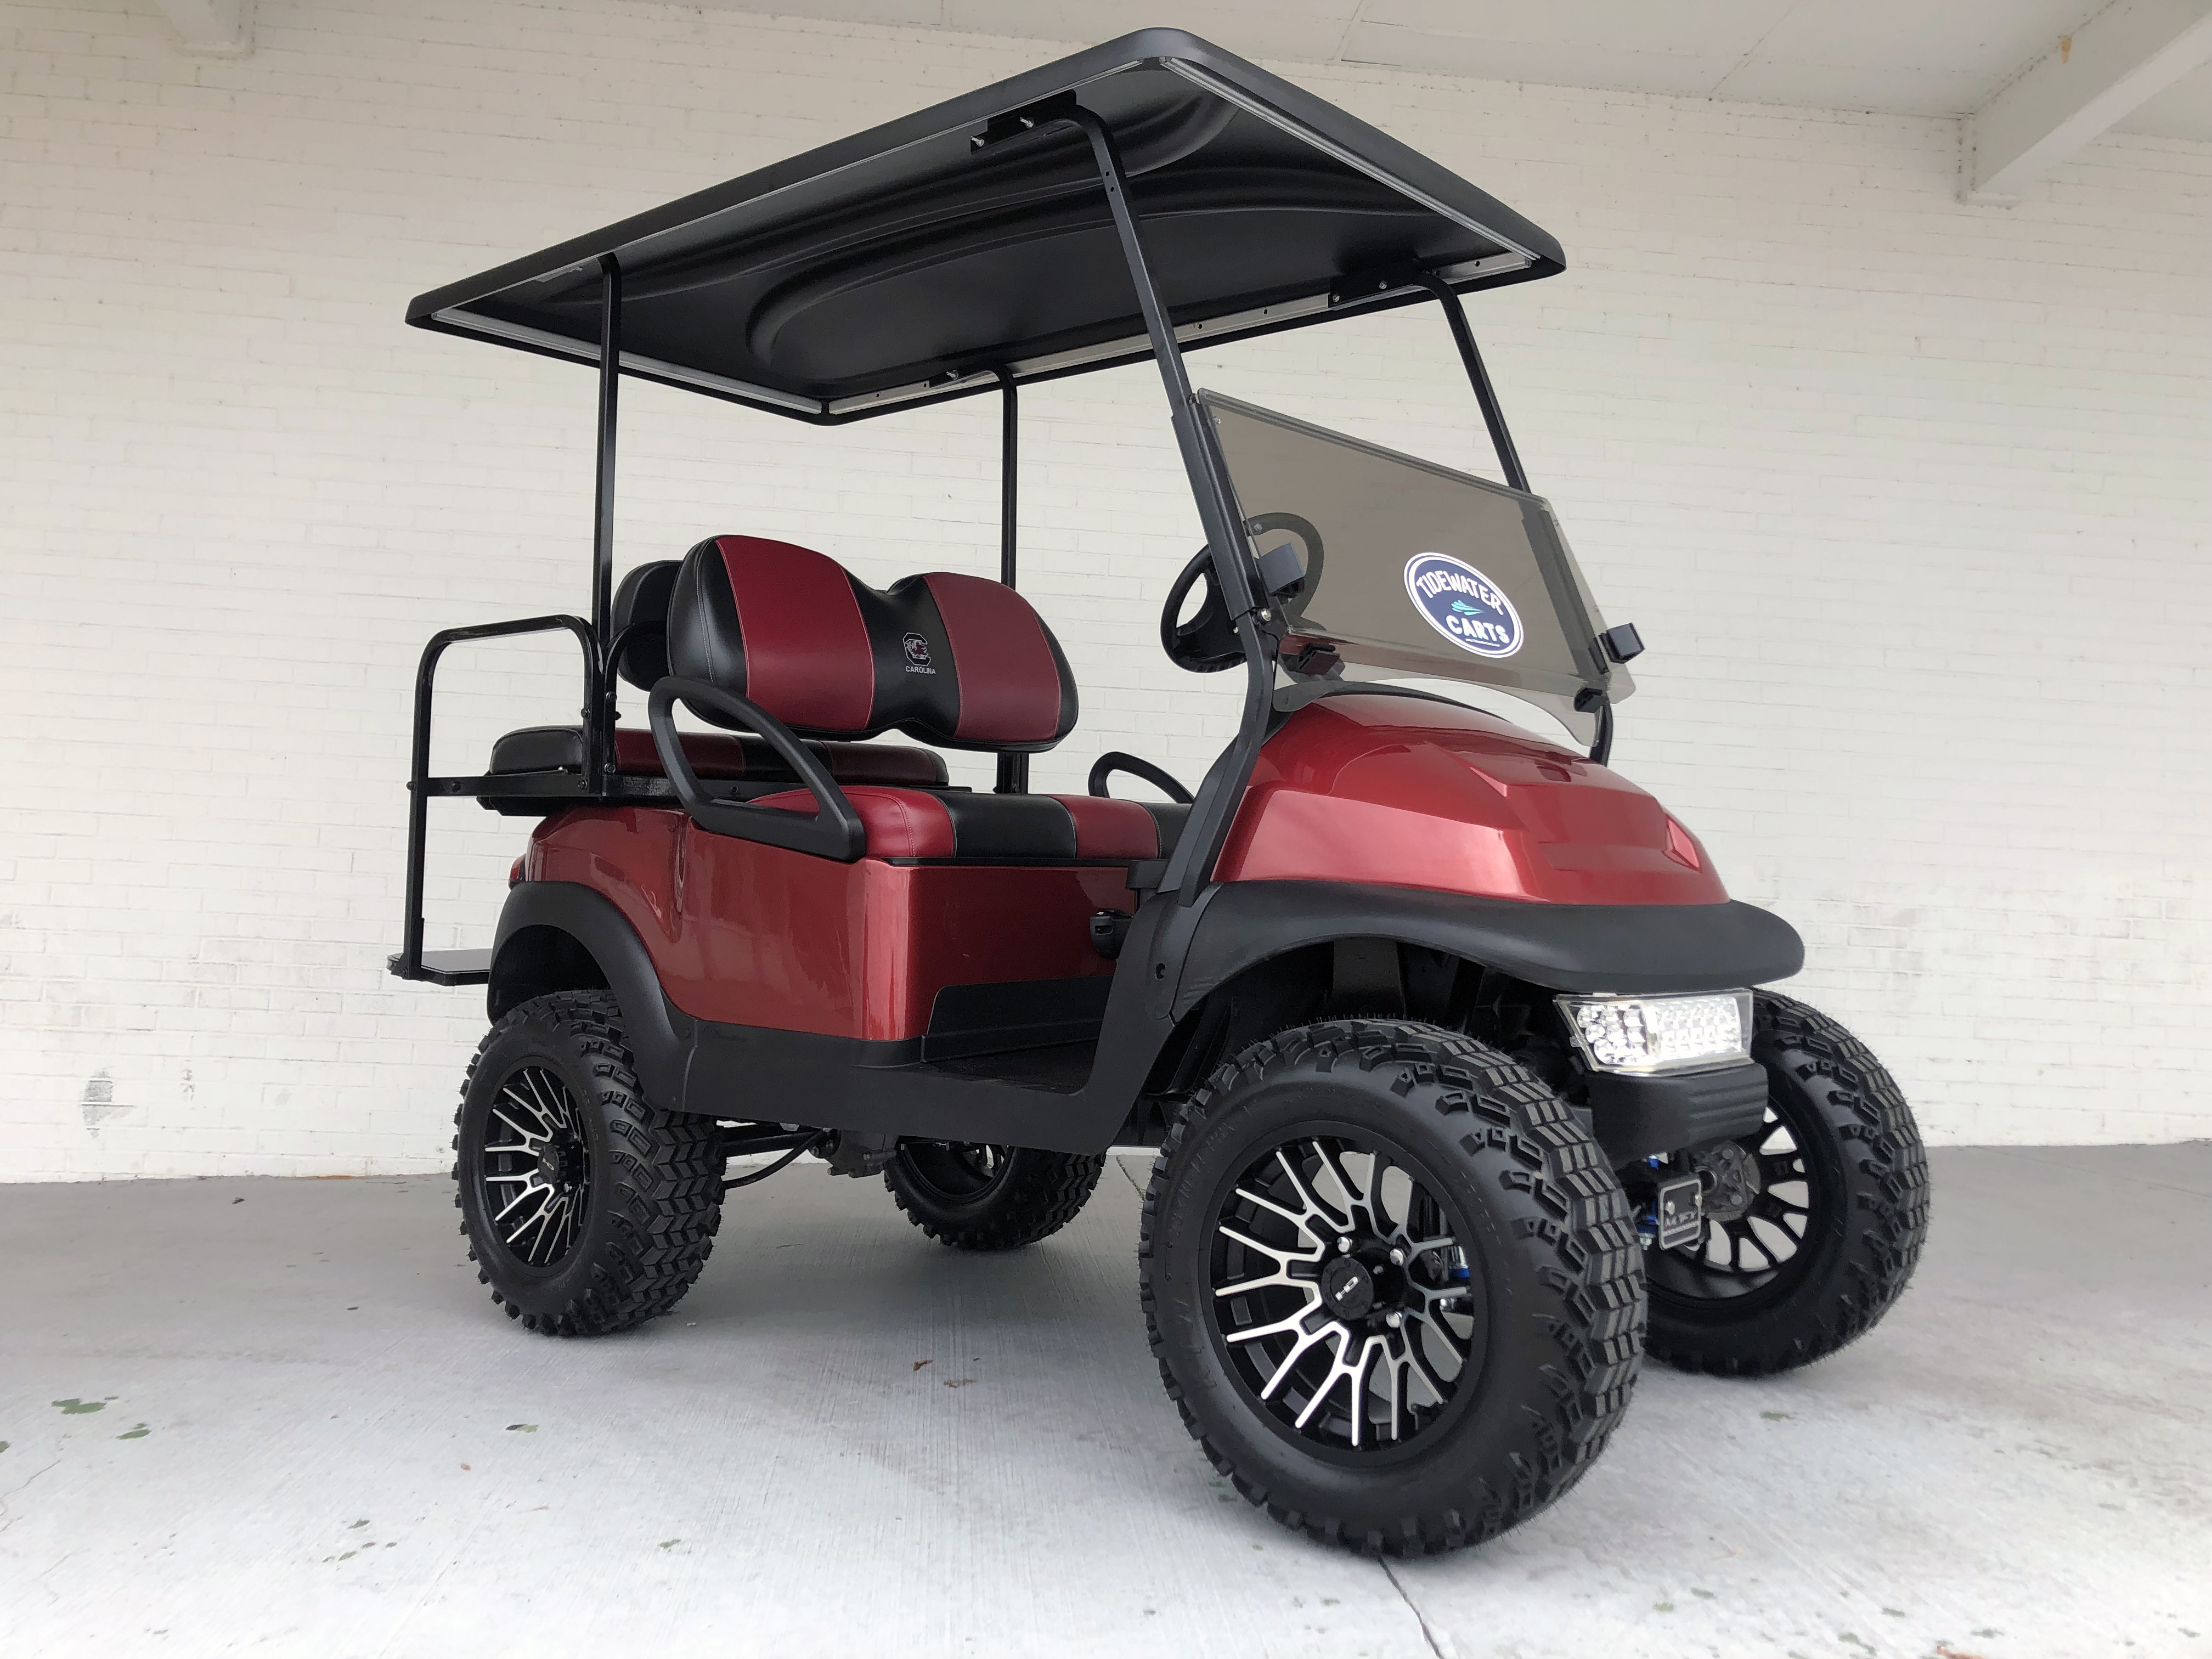 SC Gamecocks Lifted Club Car Golf Cart